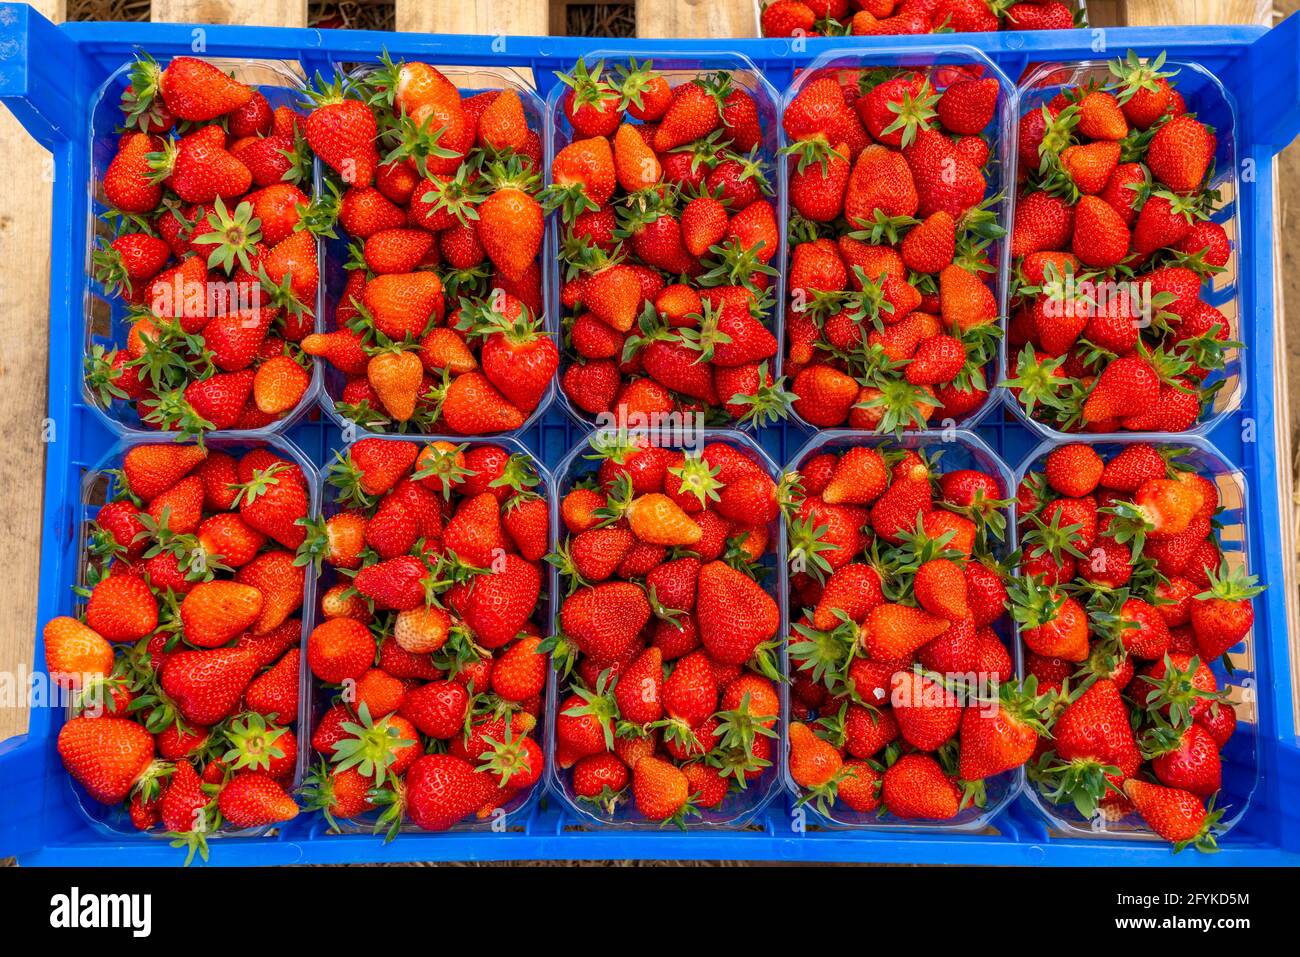 Ernte von Erdbeeren, Erdbeeranbau im Freiland, unter einem Folientunnel, junge Erdbeerpflanzen wachsen heran, in verschiedenen Reifegraden, bei Dorma Foto de stock